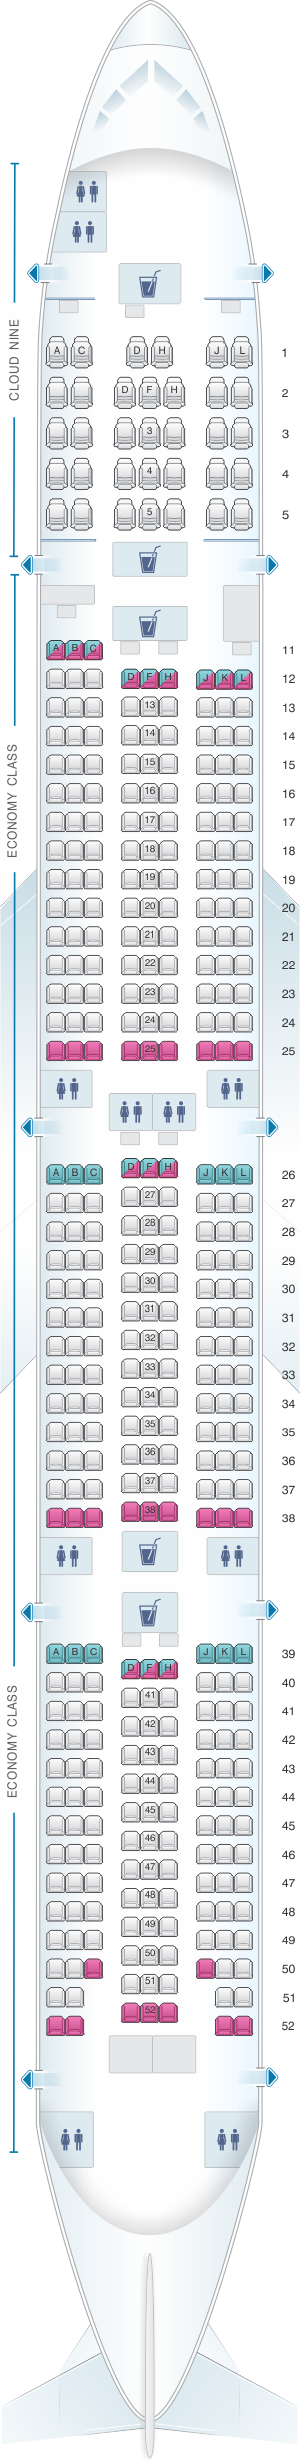 Seat map for Ethiopian Boeing B777 300ER